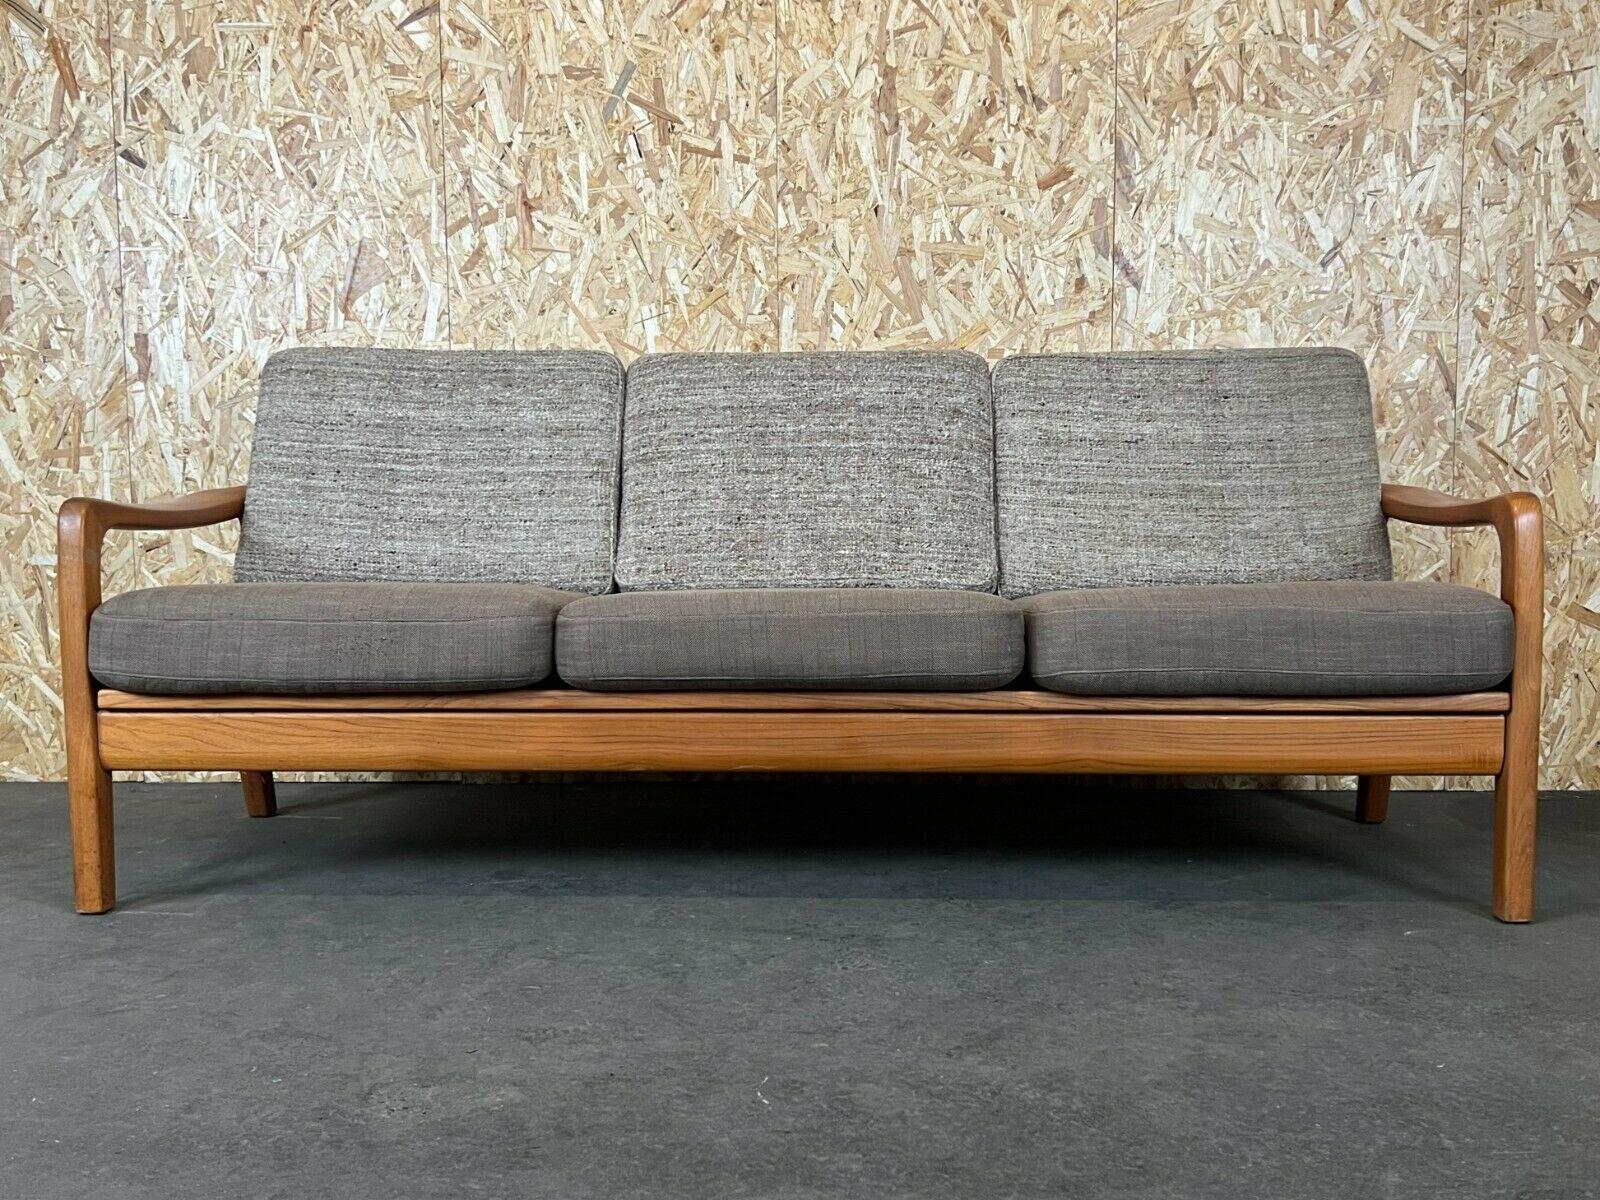 60s 70s Teak sofa daybed couch J. Kristensen Danish Denmark Design 60s

Object: sofa

Manufacturer: Juul Kristensen

Condition: good - vintage

Age: around 1960-1970

Dimensions:

208cm x 81cm x 82cm
Seat height = 44cm

Other